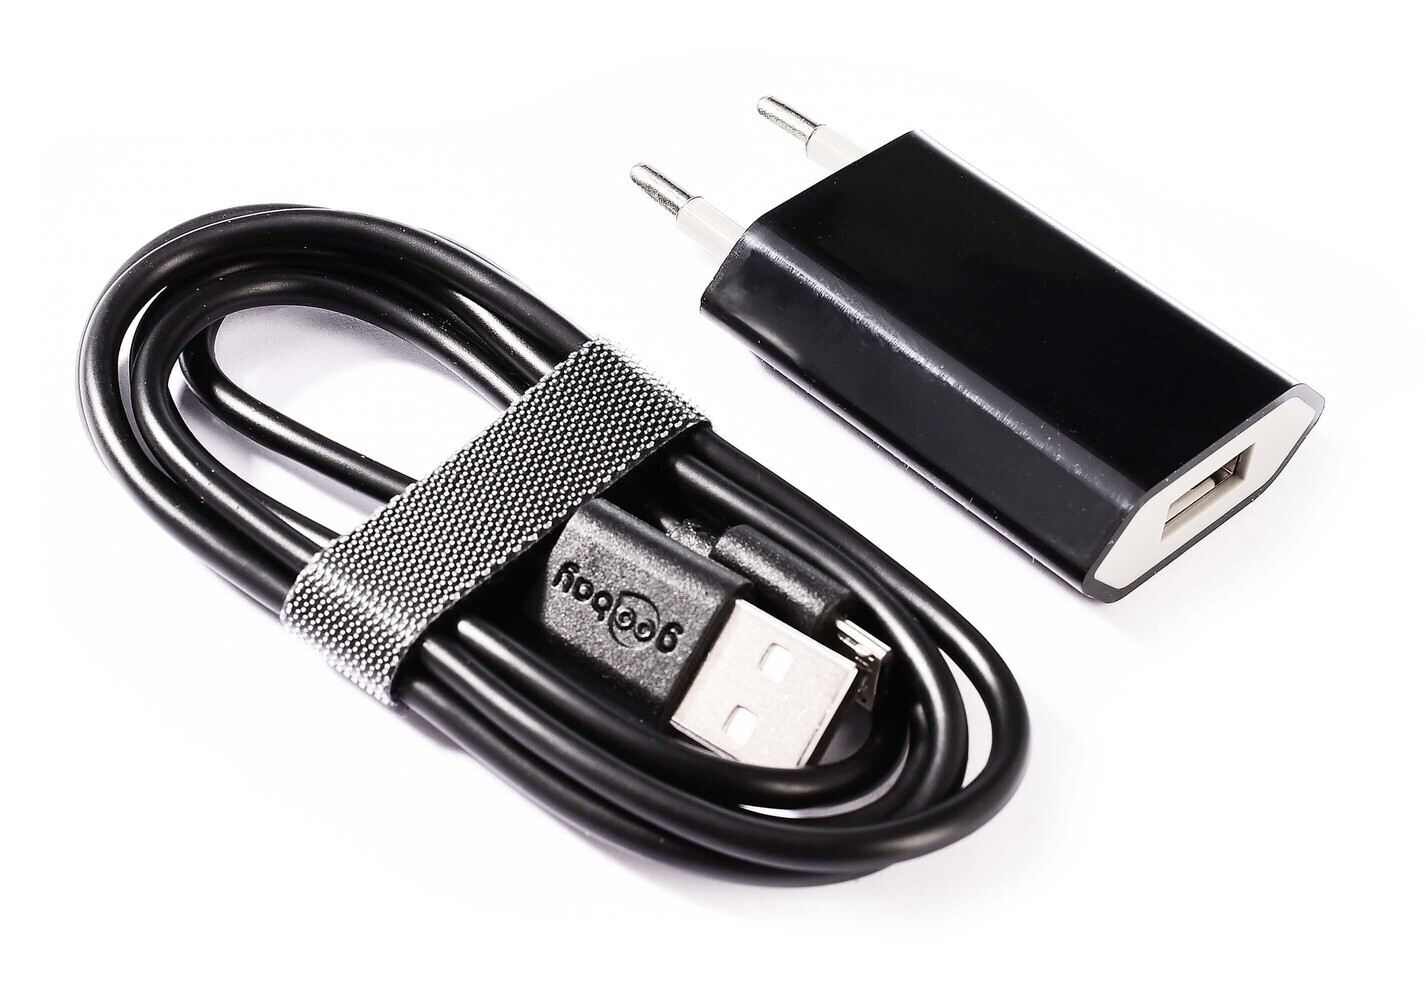 Deko-Light 930460 USB Steckernetzteil 5V DC 1000mA mit Mikro USB Kabel